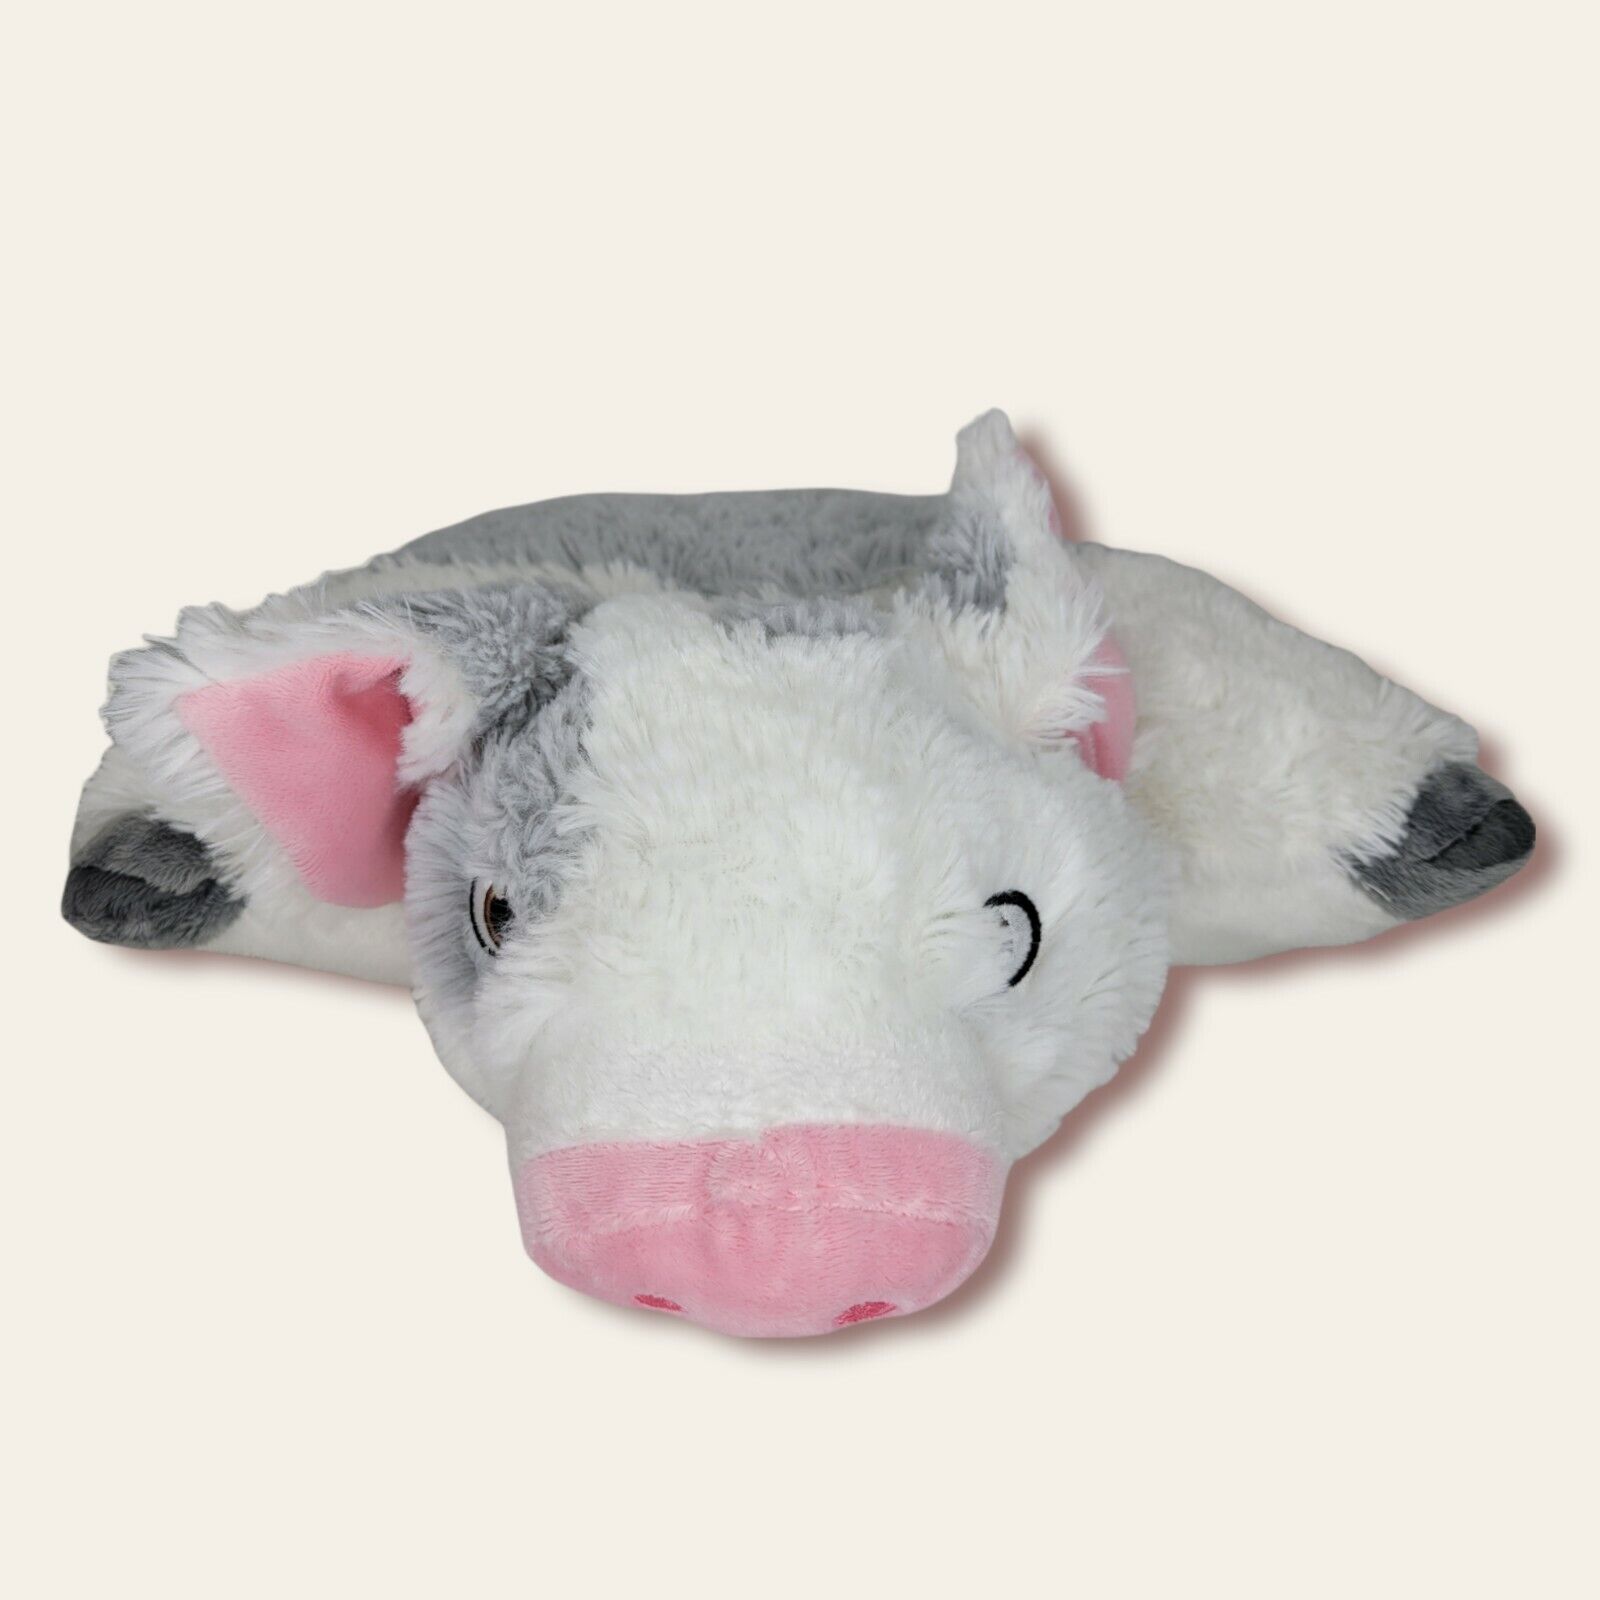 Pillow Pets Moana Plush Pig PUA 16” Stuffed Animal Disney Movie Plush F4 NWOT